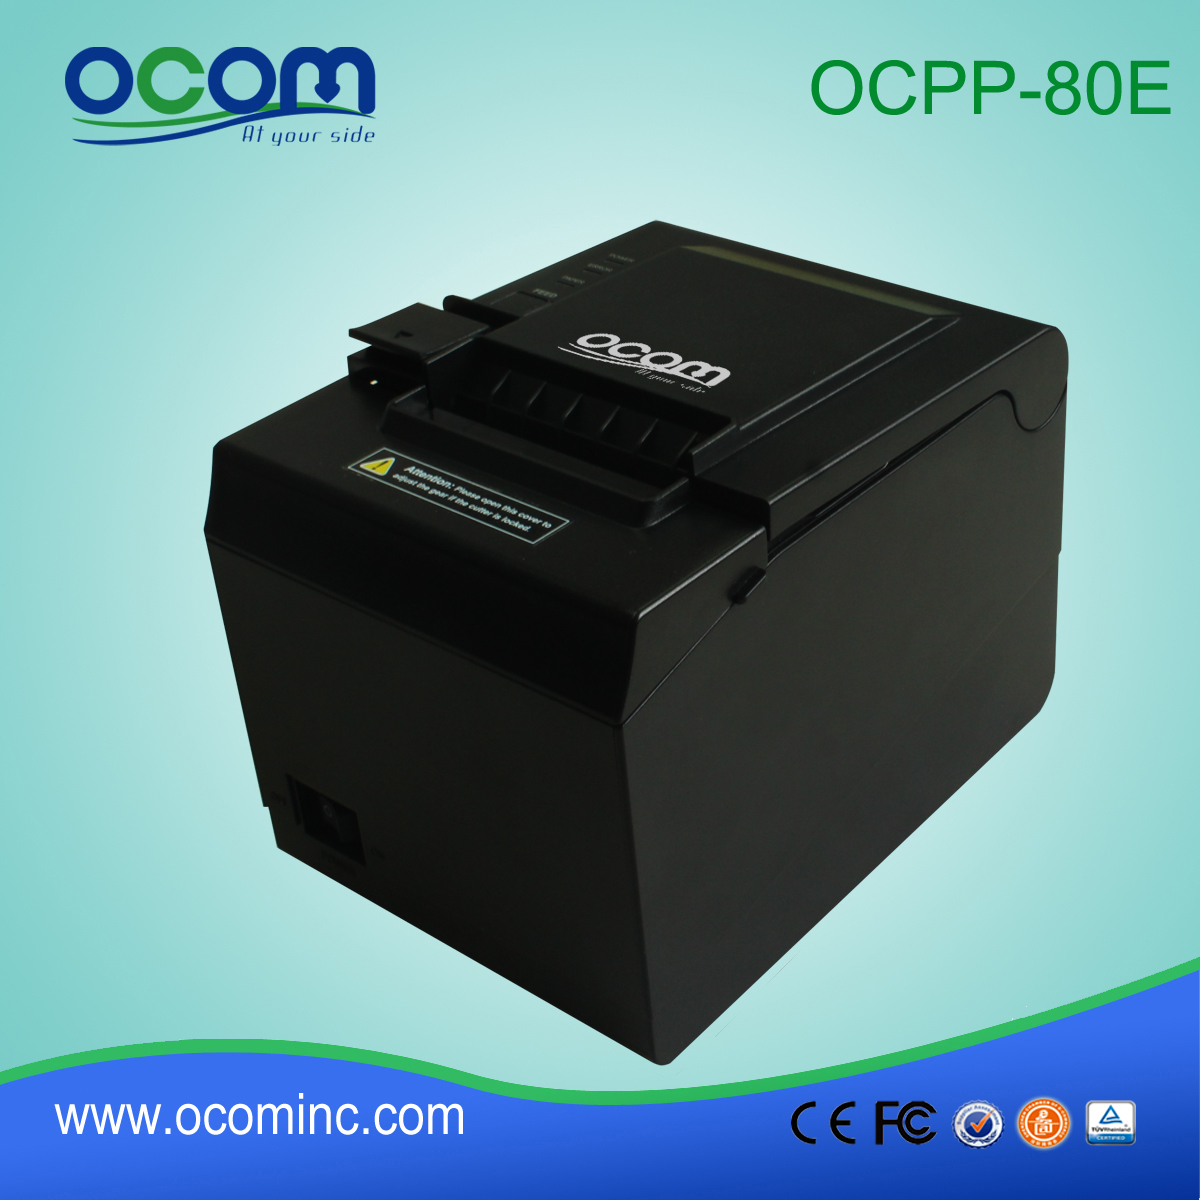 OCPP-80E beste kwaliteit 80mm pos thermische printer prijs